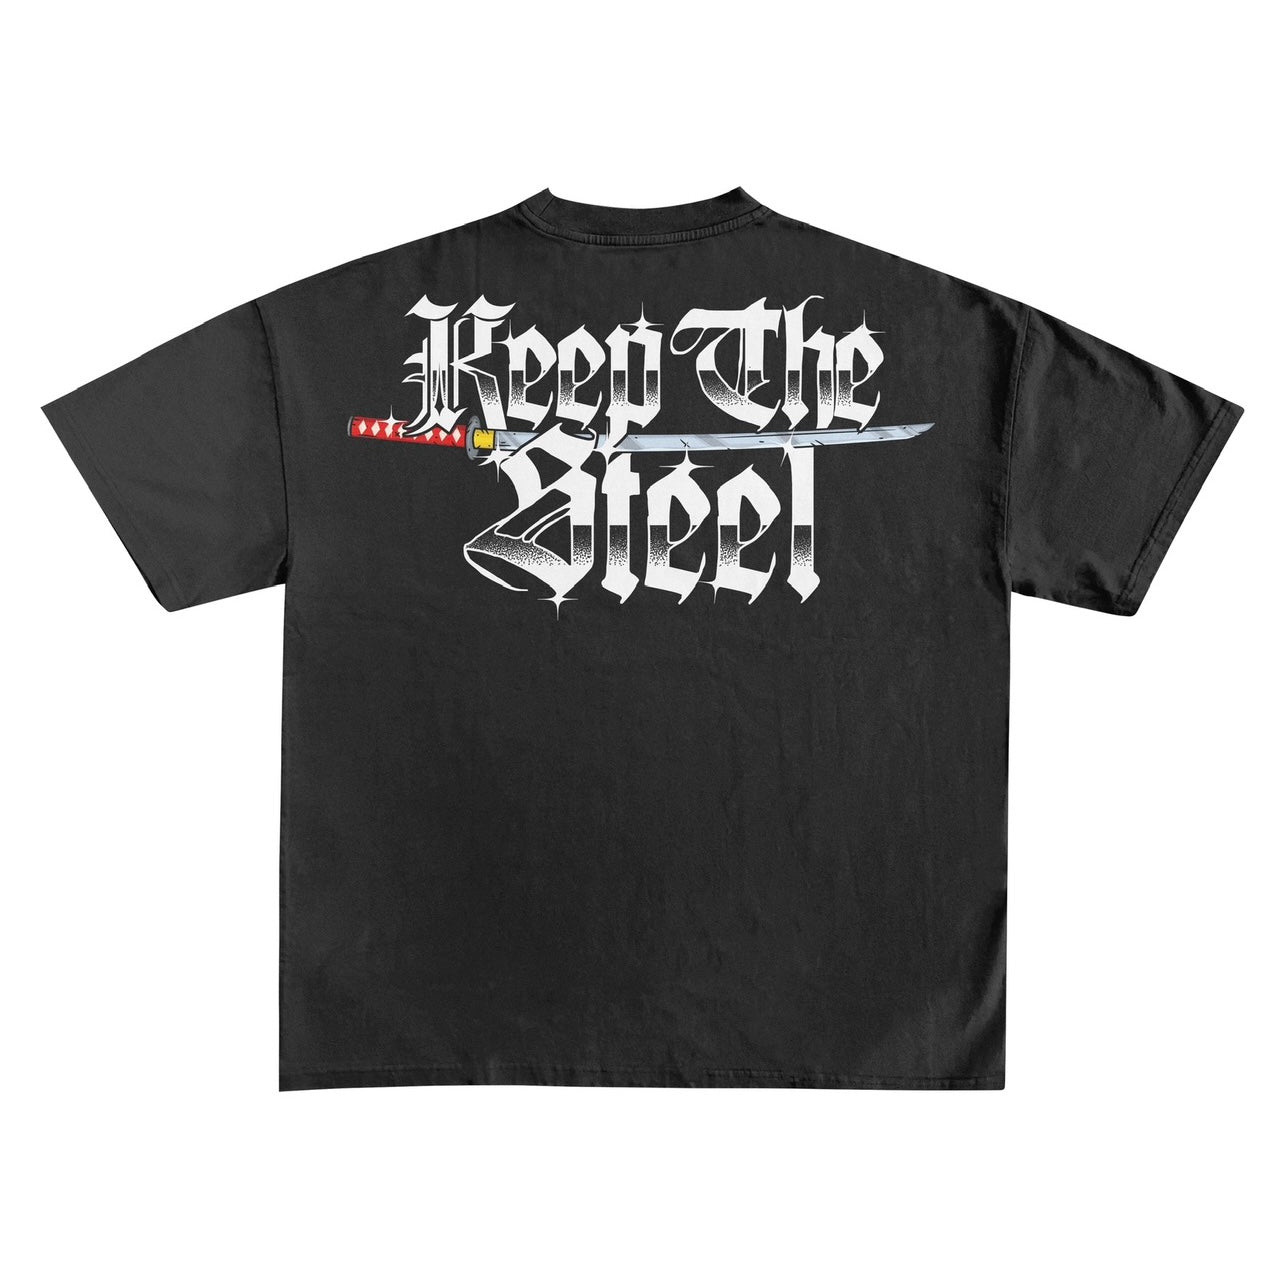 Keep the Steel - Black - T-Shirt